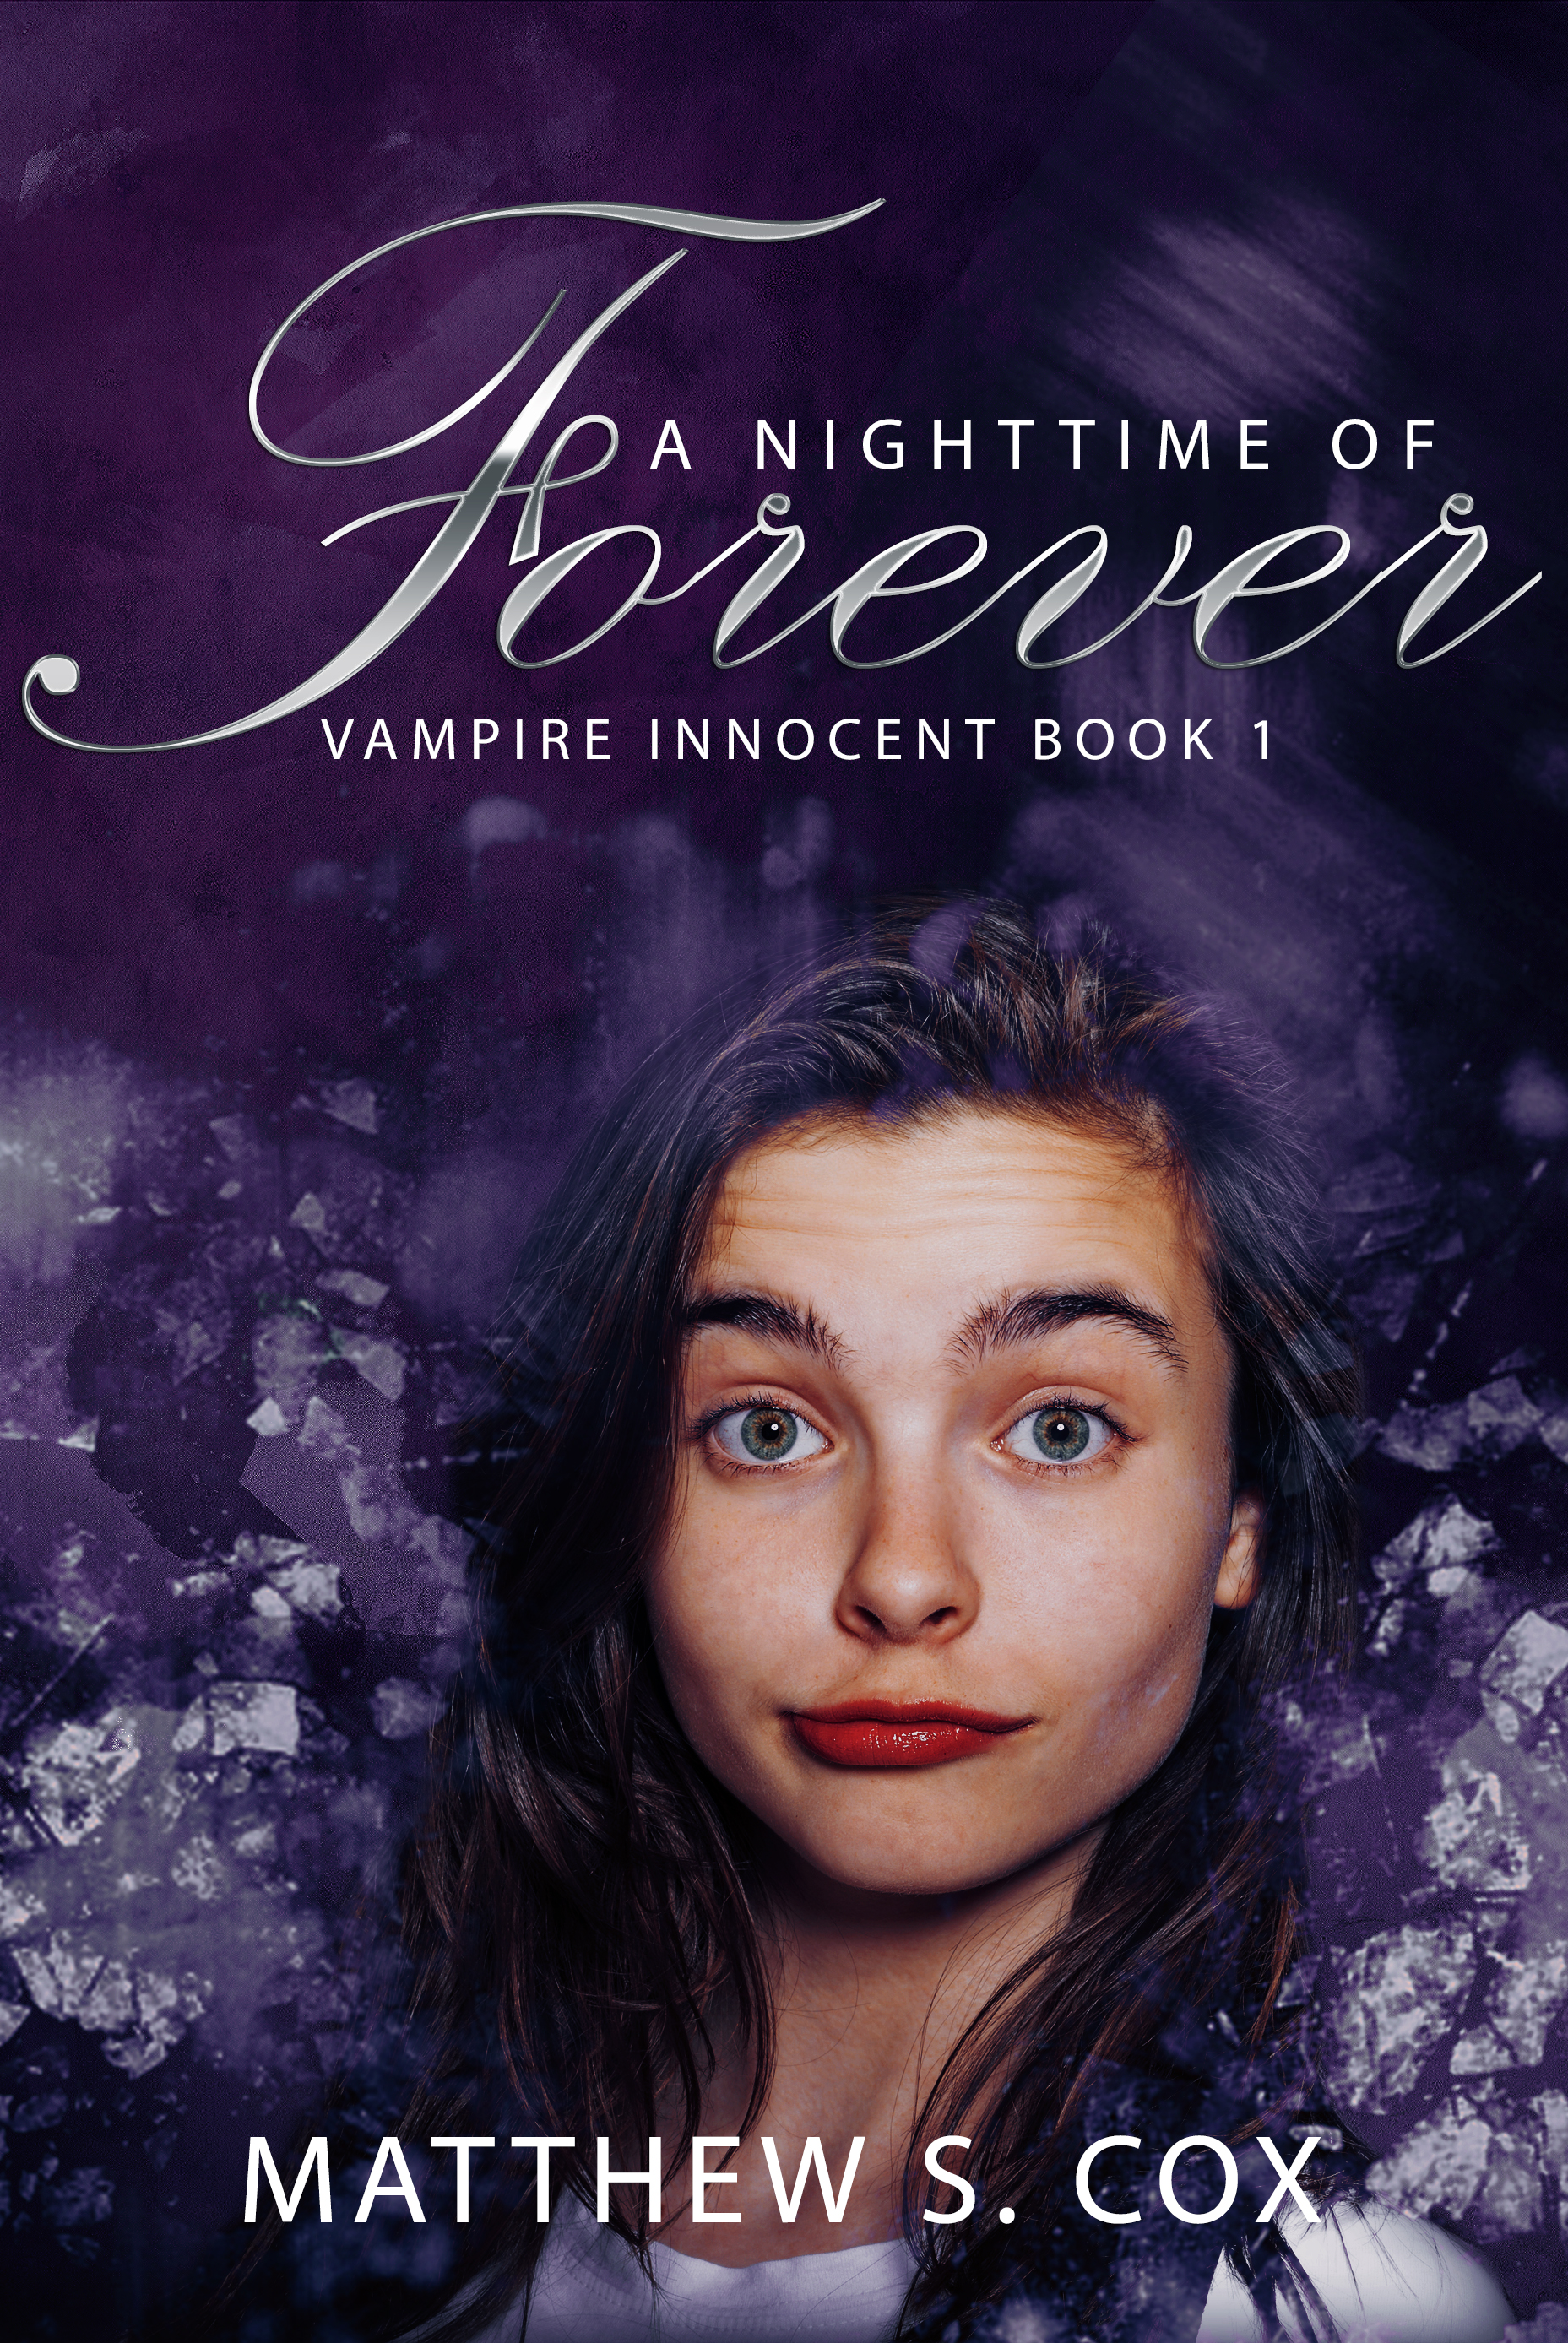 Vampire Innocent series - dark comedy, vampires, and magic.